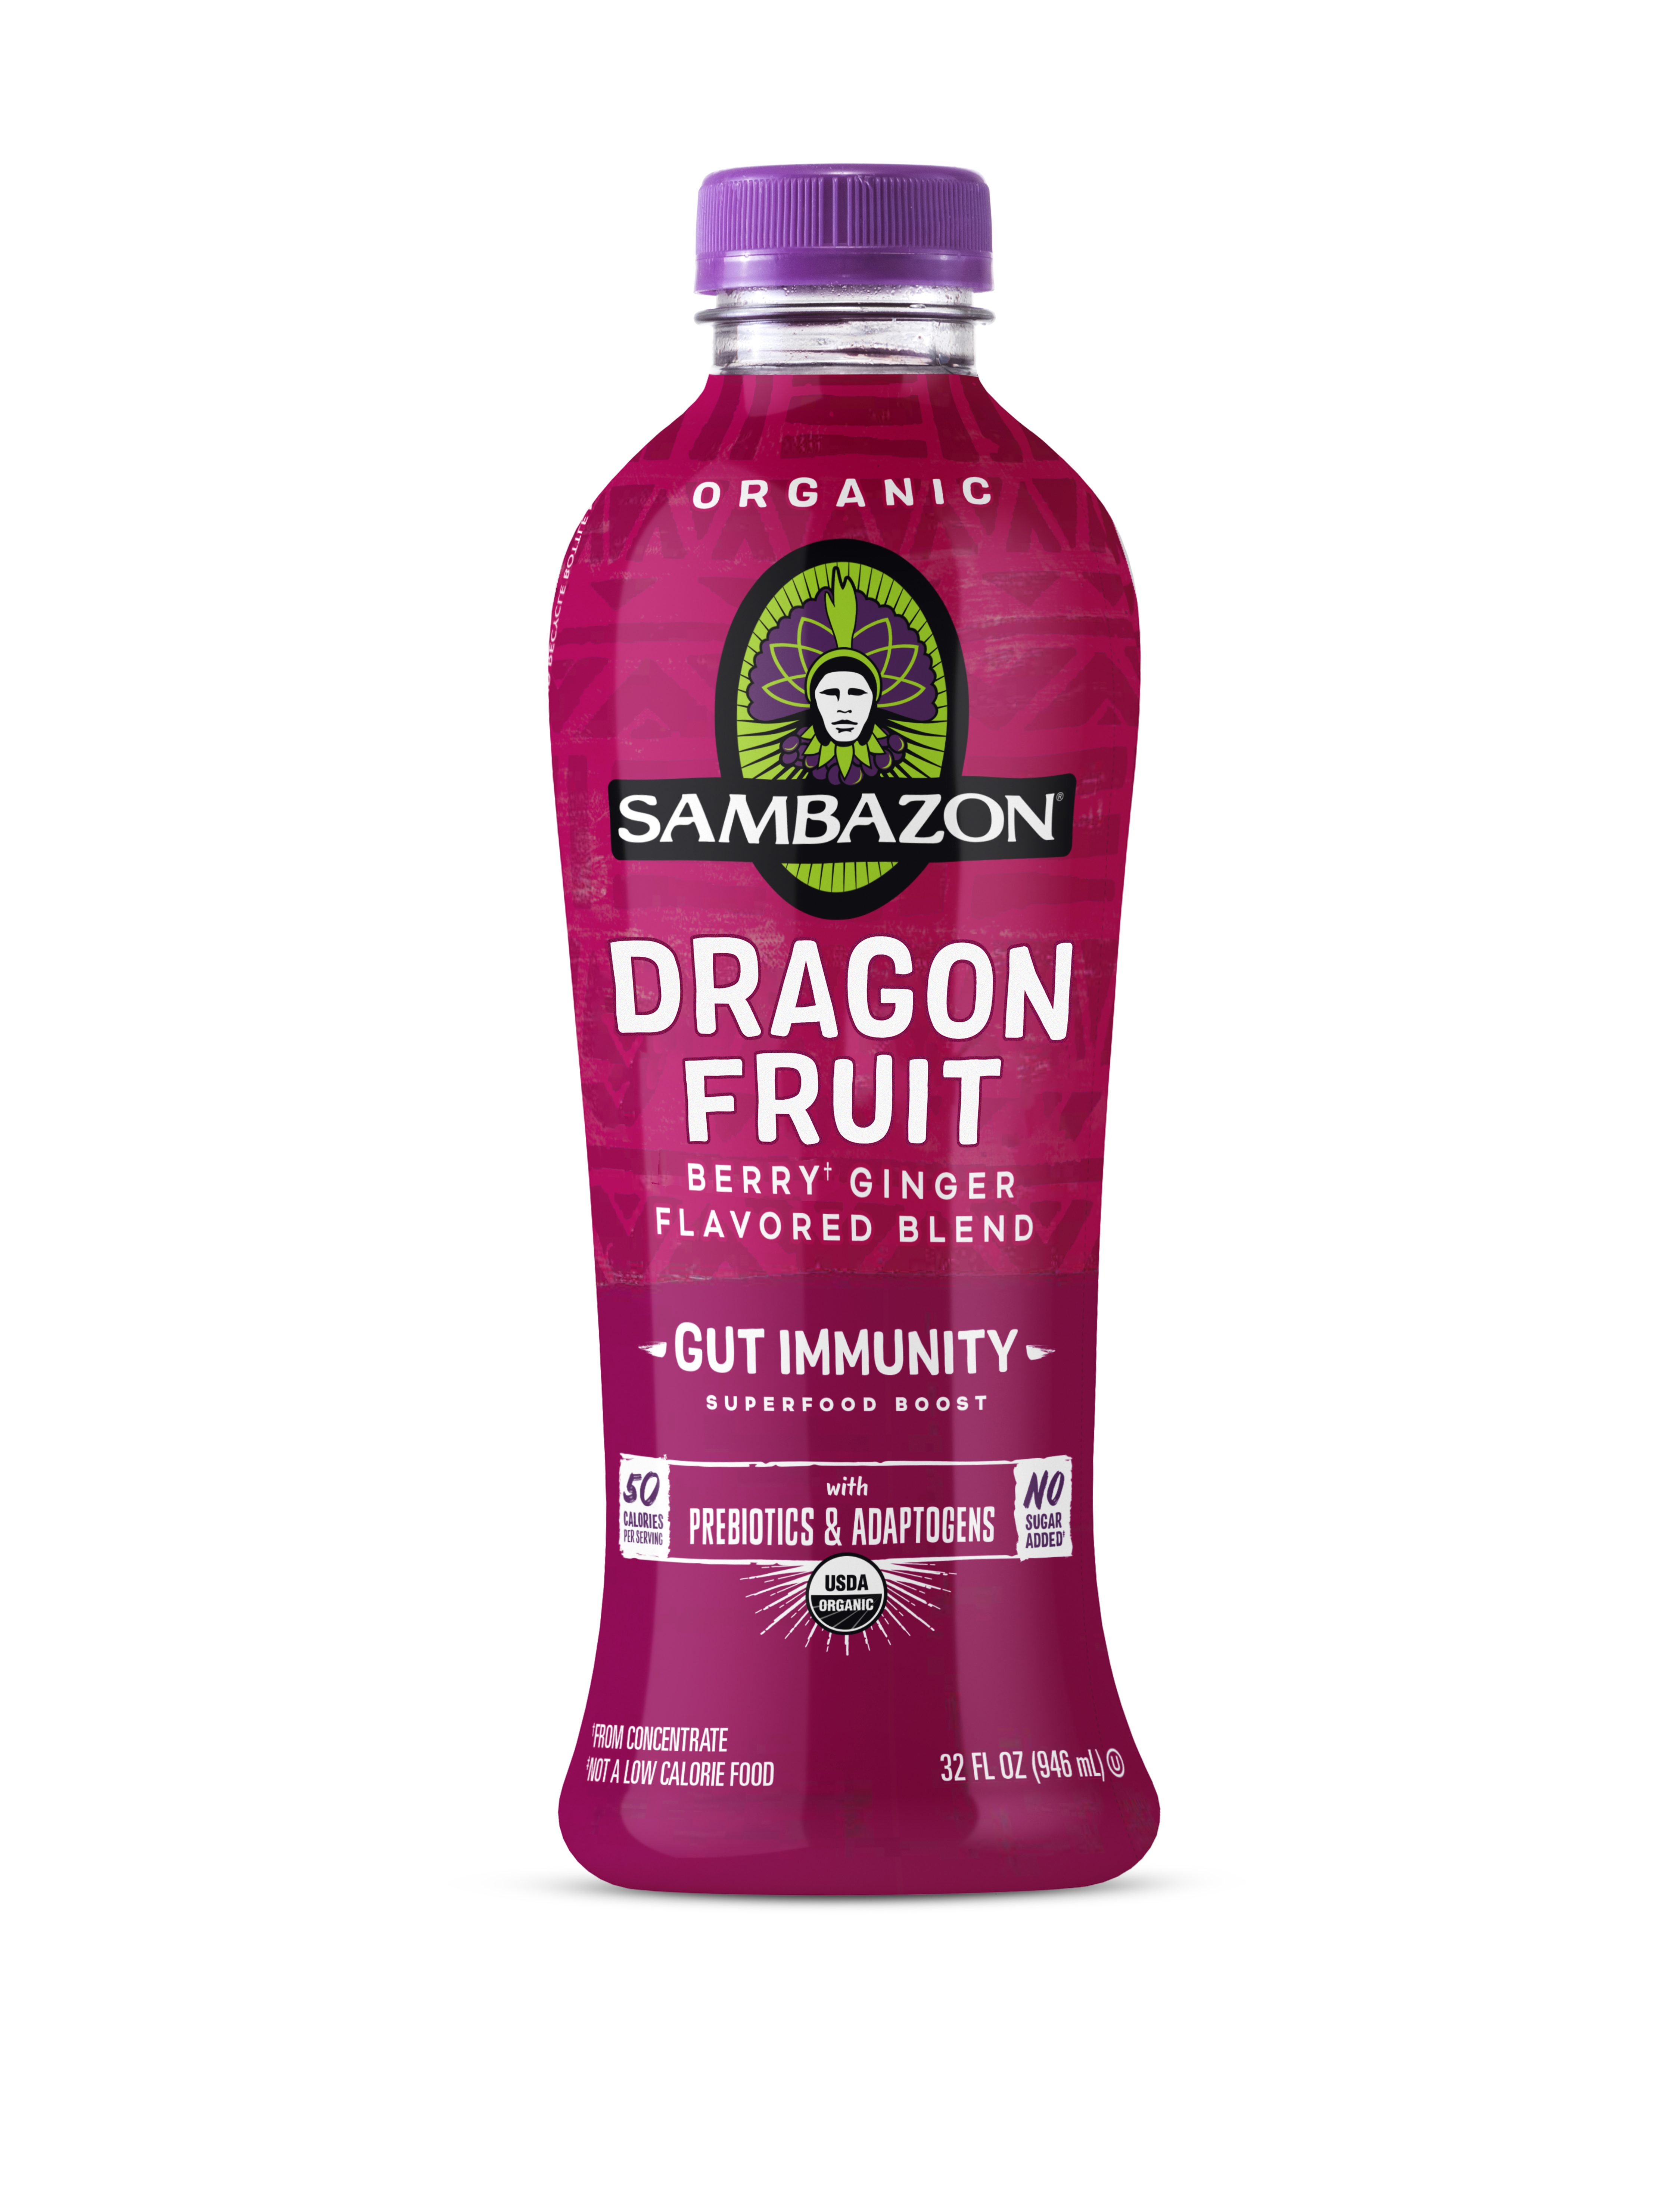 Sambazon Dragon Fruit Juice 32oz 6 units per case 32.0 oz